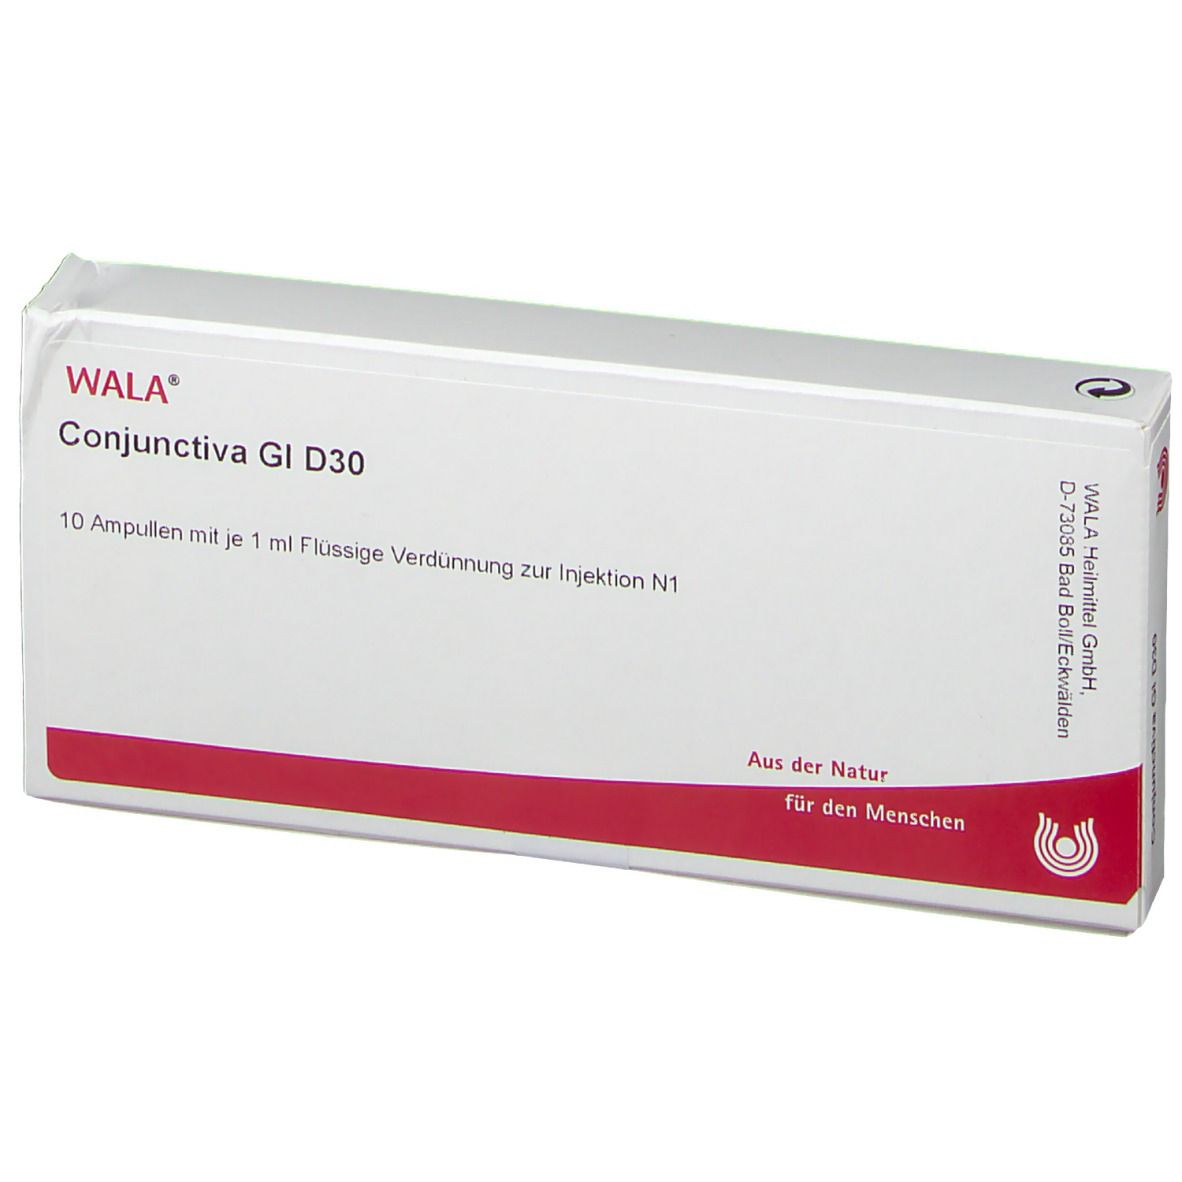 WALA® Conjunctiva Gl D 30